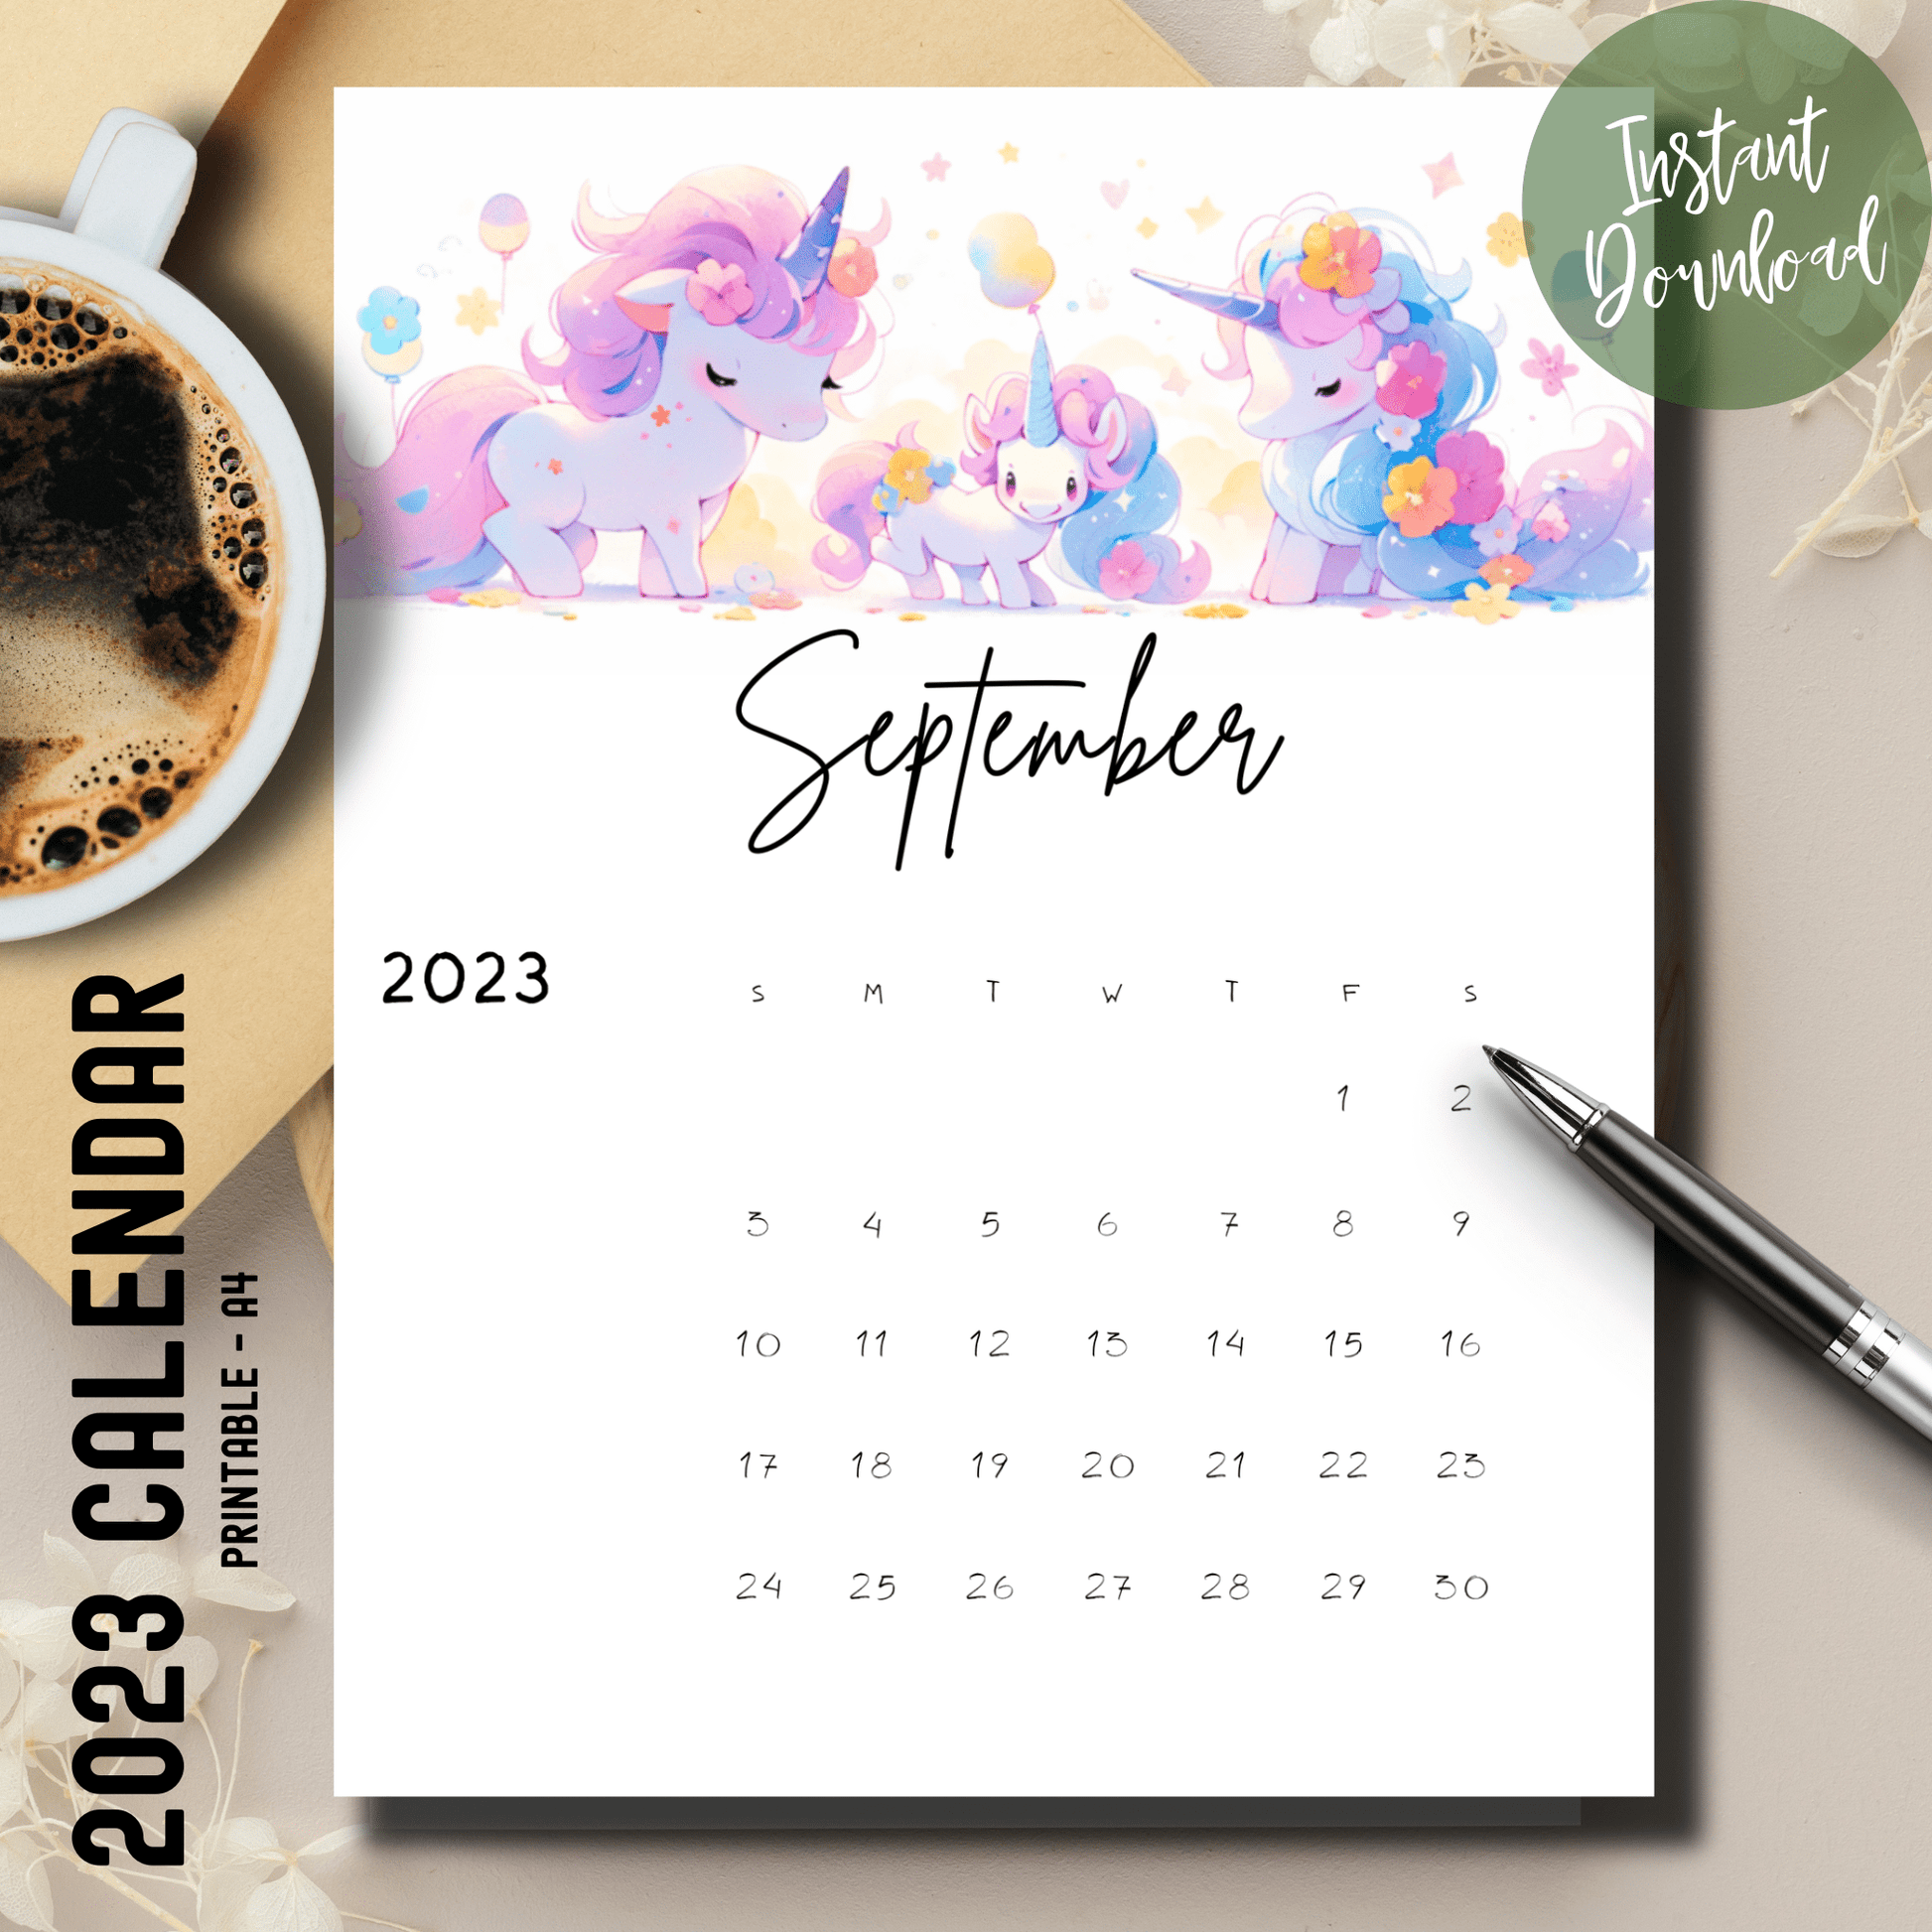 Sarsari Creations' vertical A4-sized calendar for September 2023 showcasing vibrant anime unicorn illustrations.